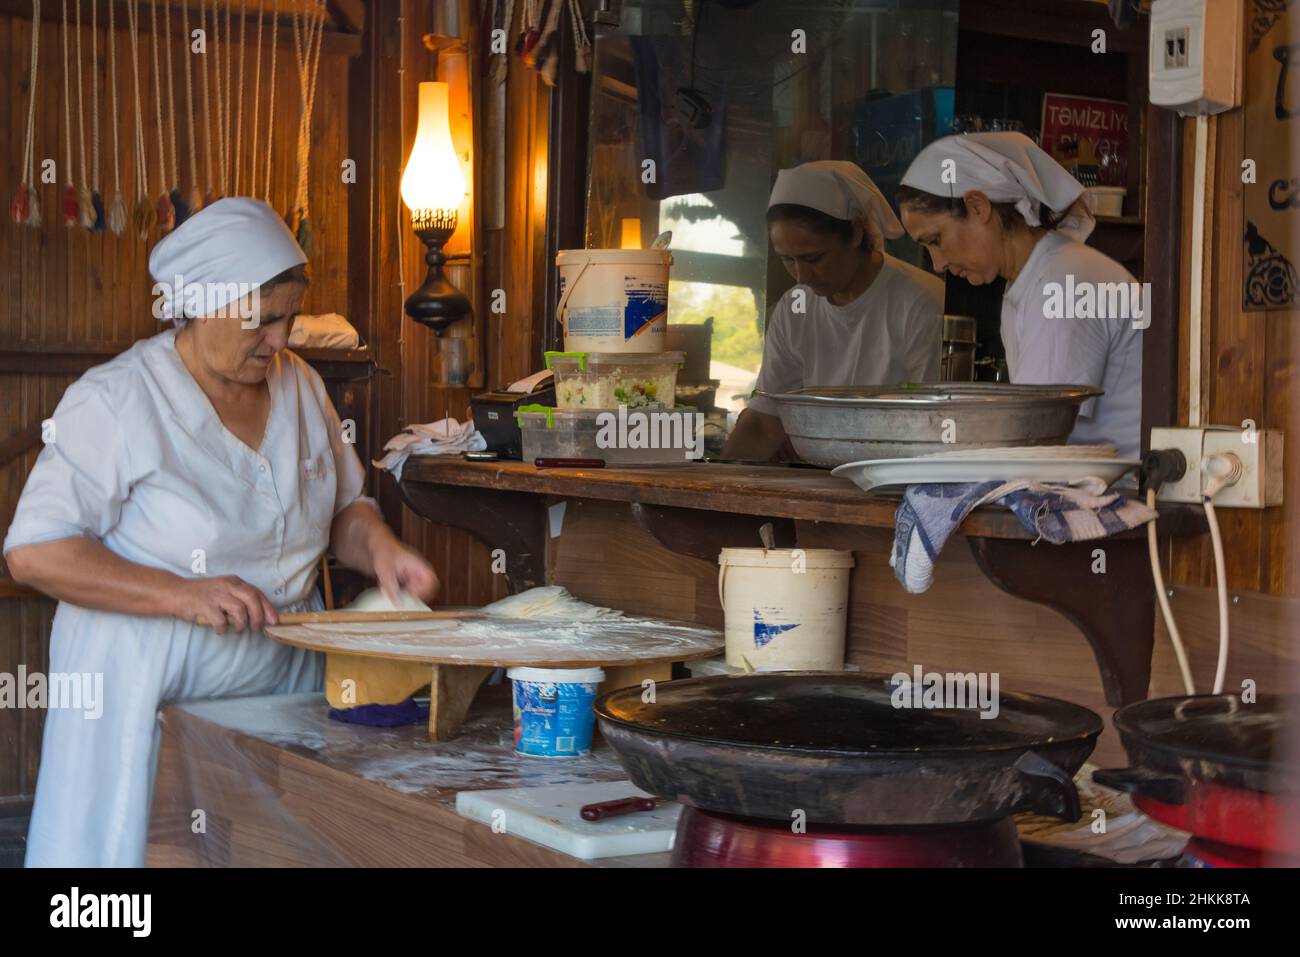 Making Tandir bread in a restaurant, Baku, Azerbaijan Stock Photo